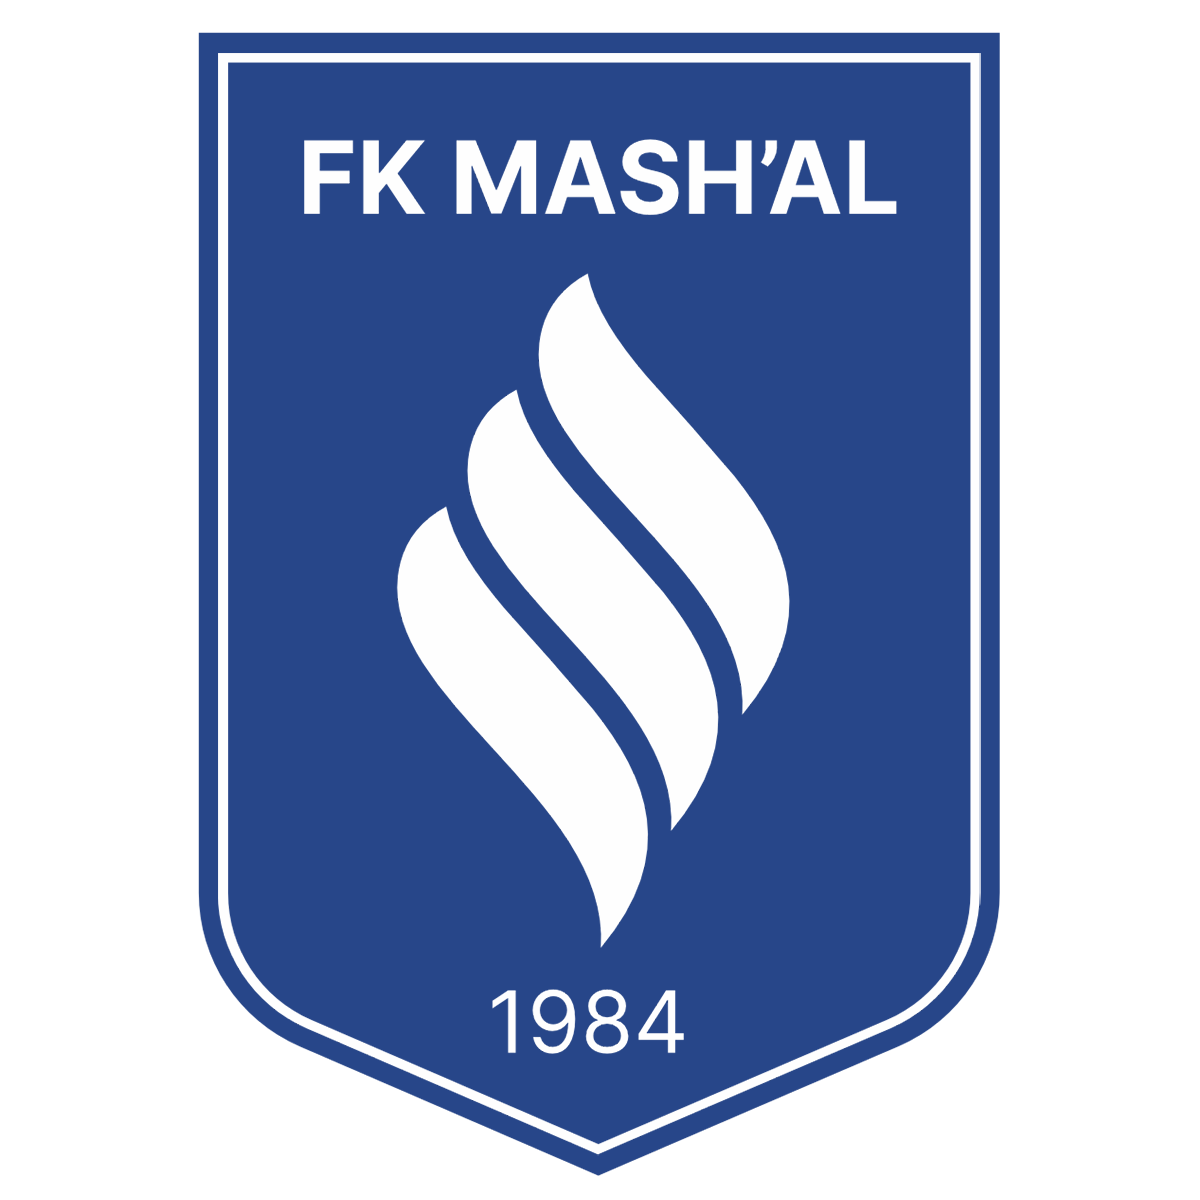 Mashal